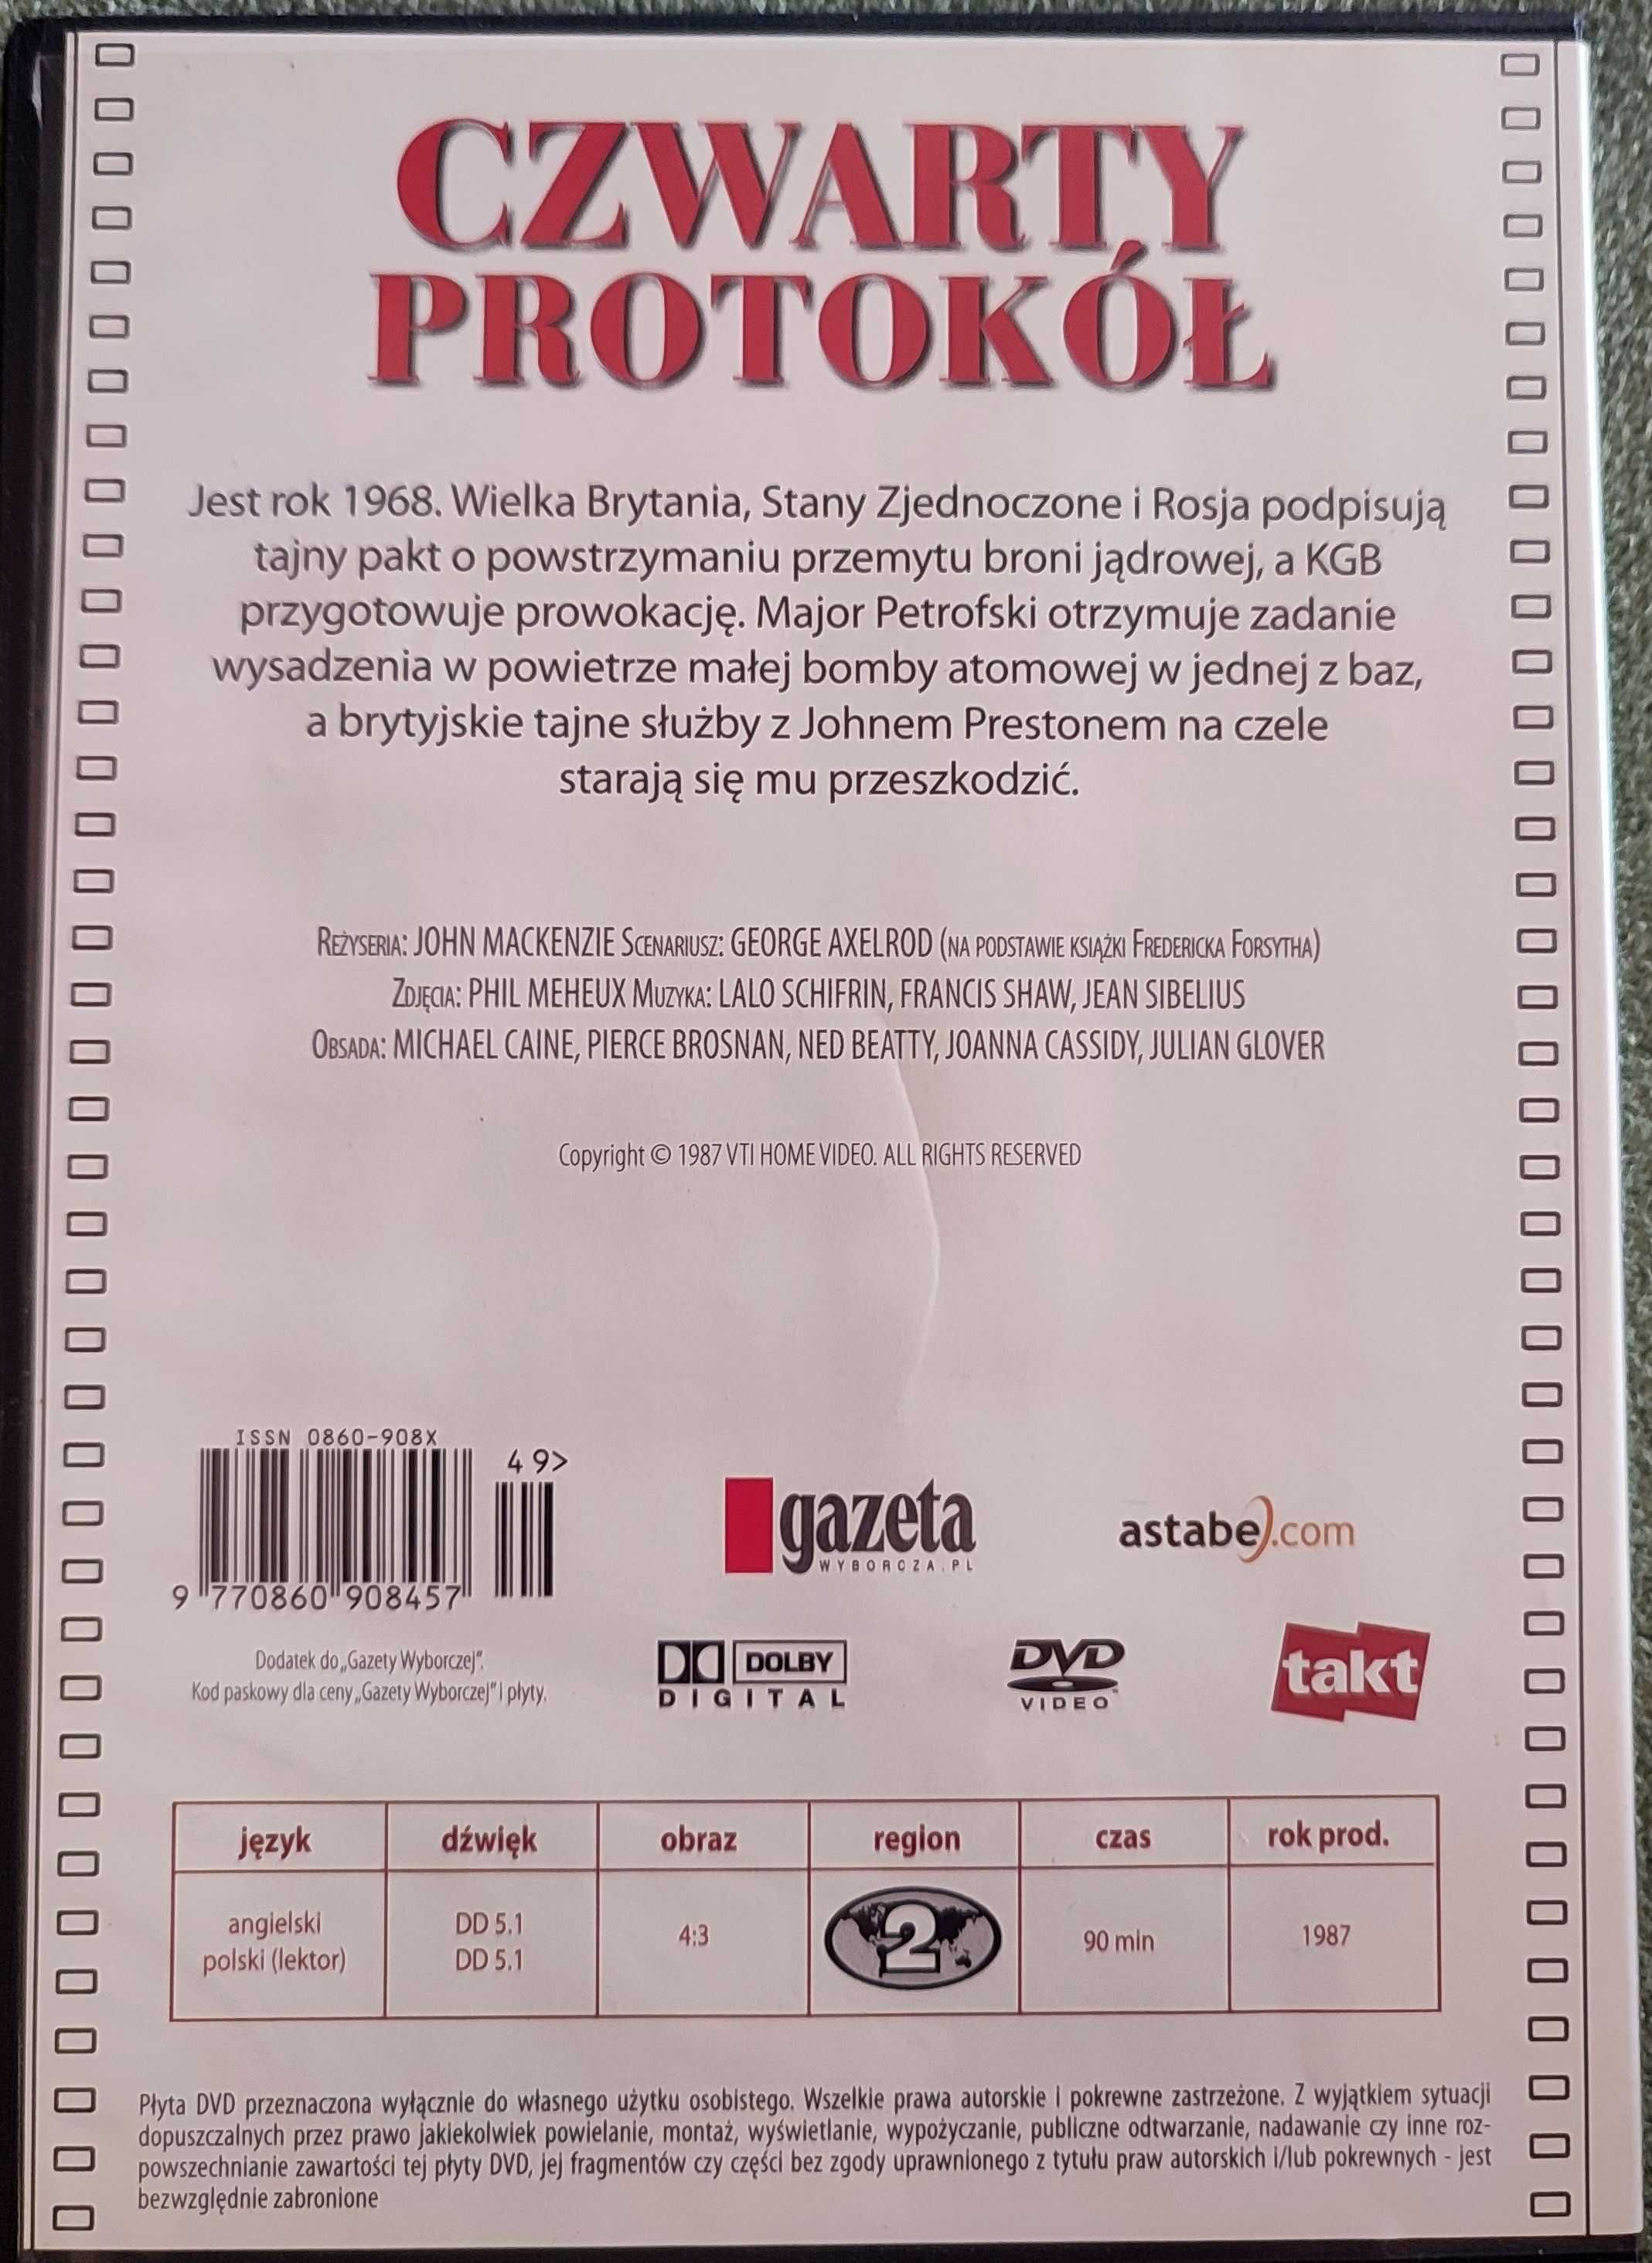 Film DVD Czwarty protokół. Michael Caine, Pierce Brosnan